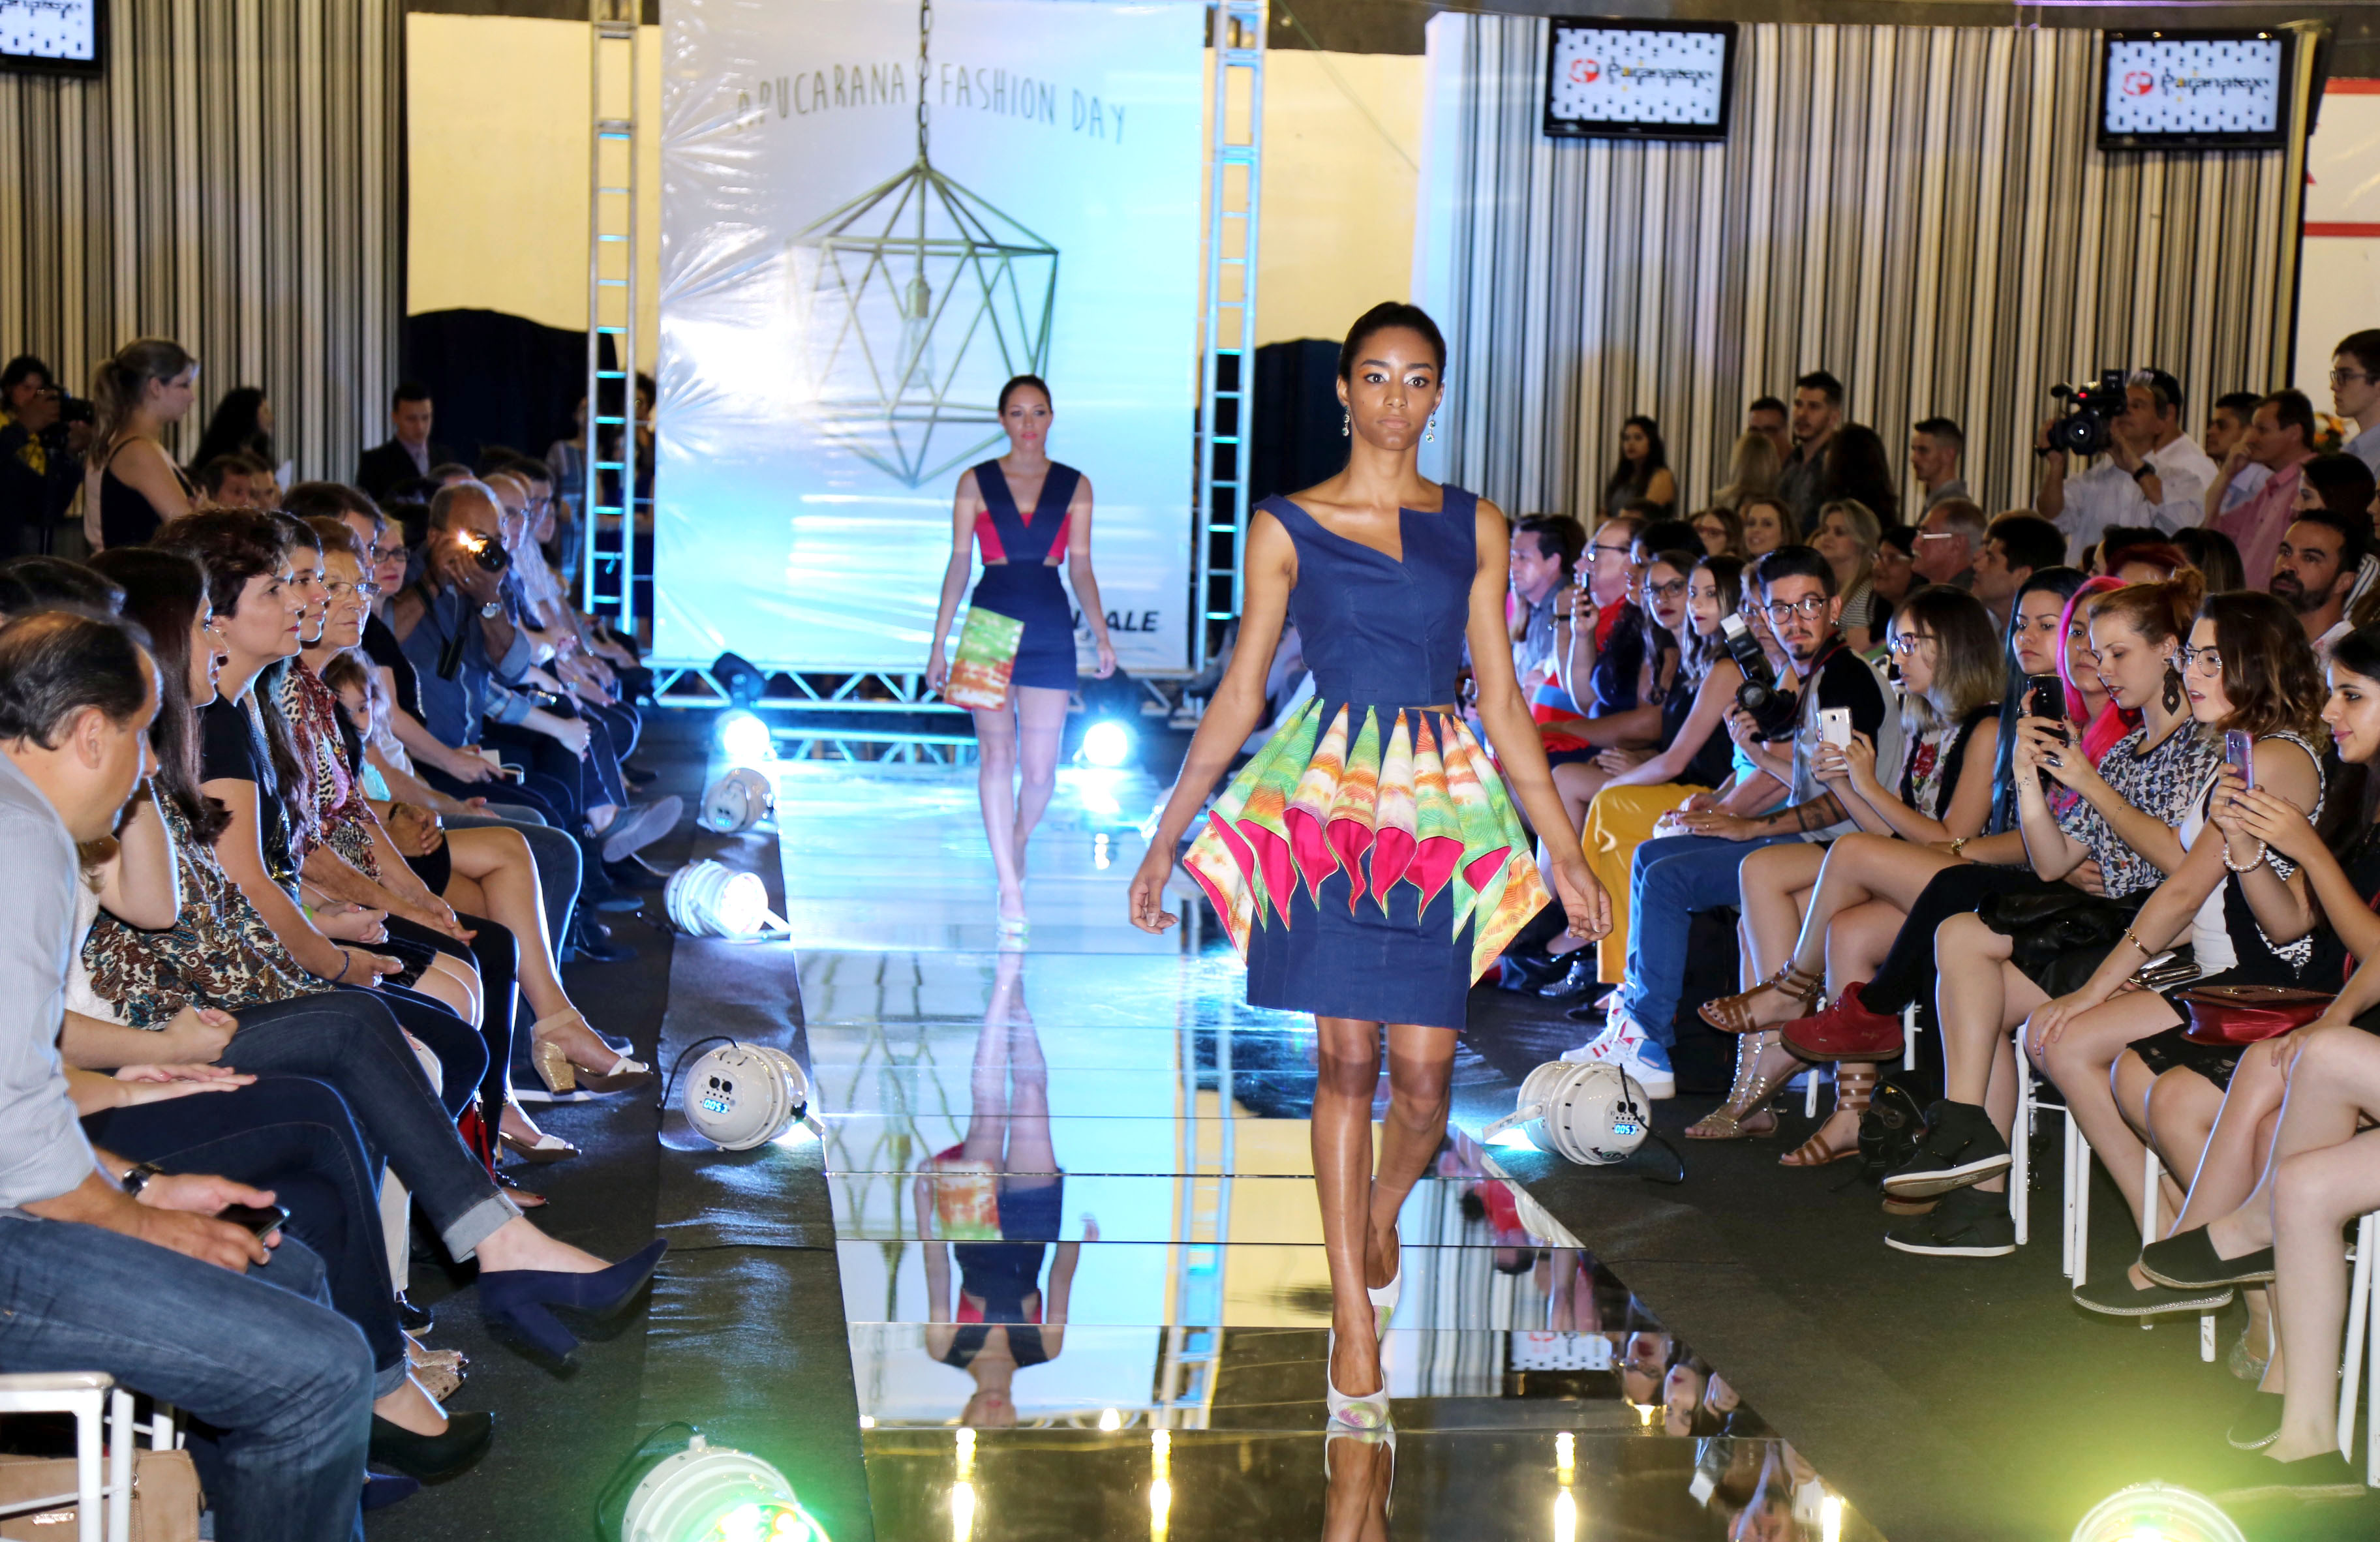 Apucarana Fashion Day terá desfile de treze marcas. Foto: profeta